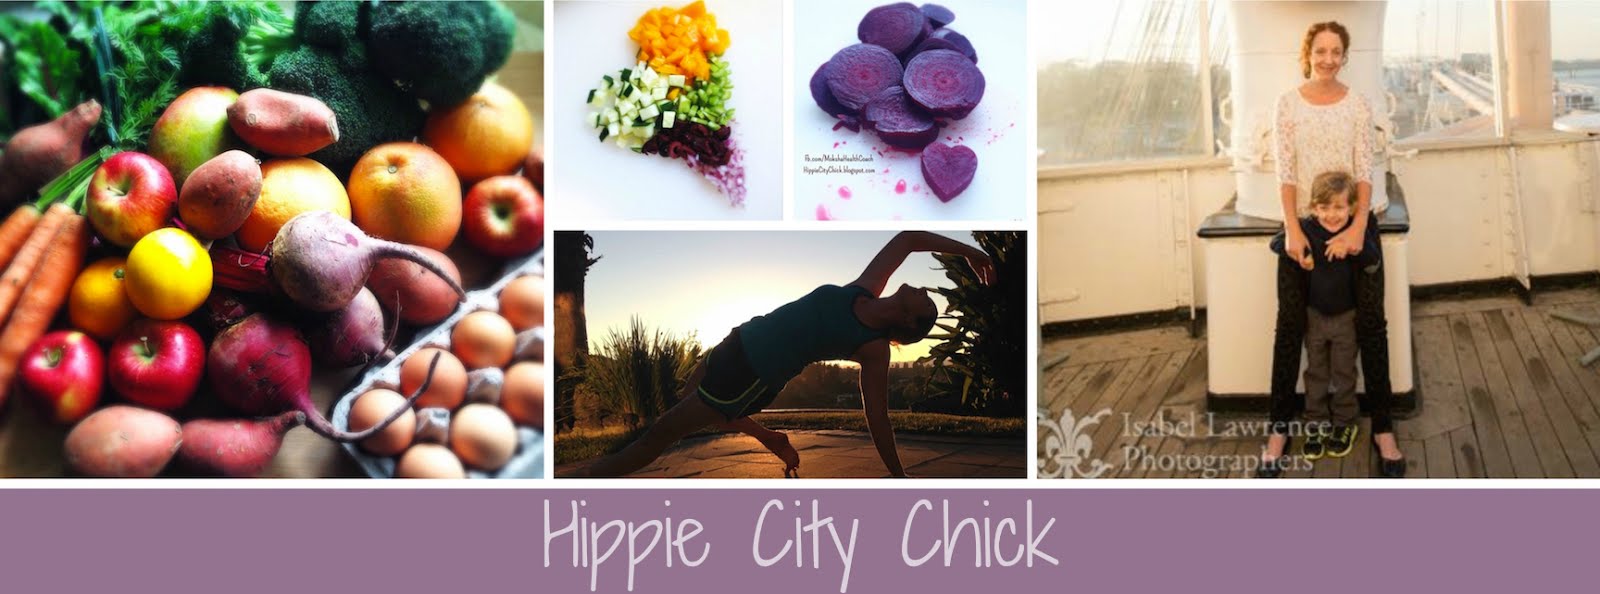 Hippie City Chick